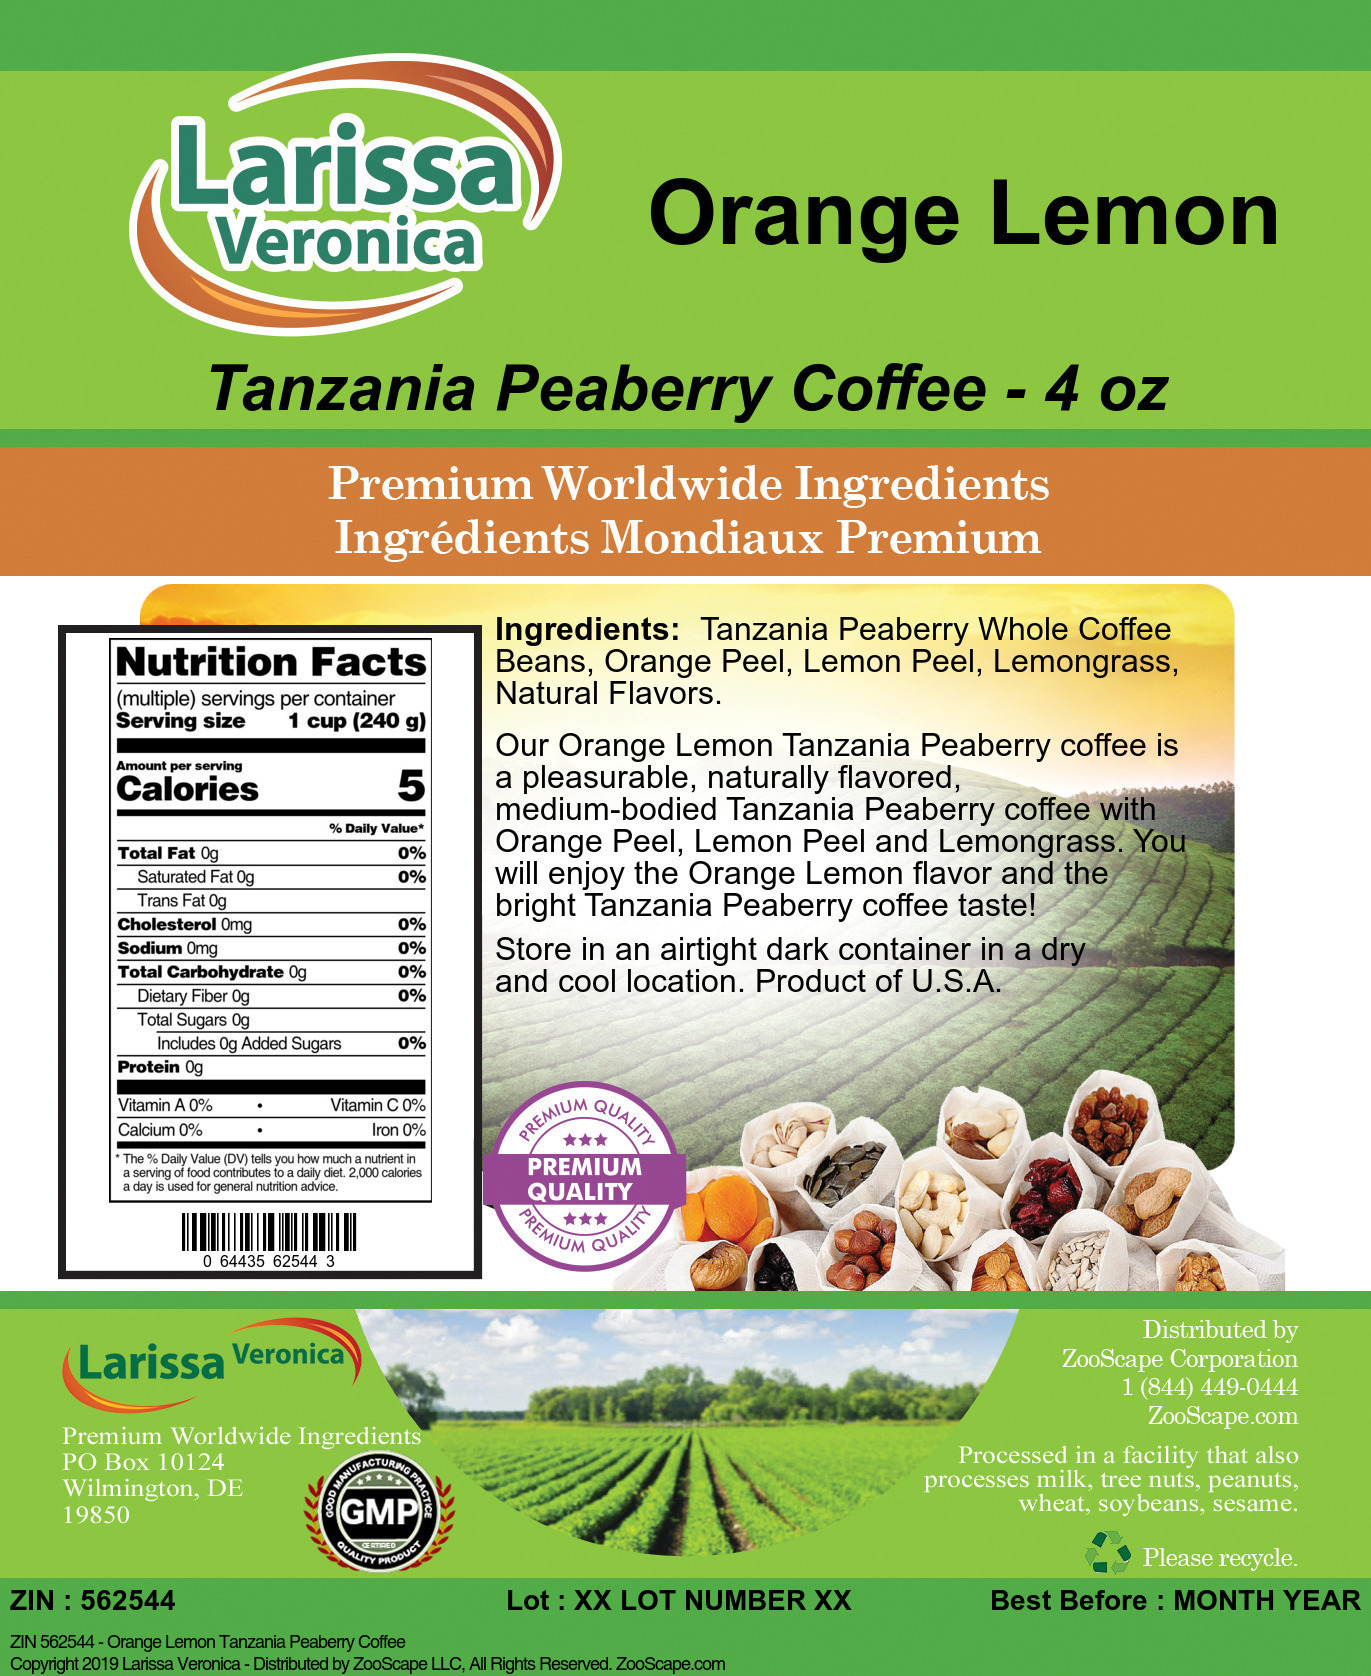 Orange Lemon Tanzania Peaberry Coffee - Label